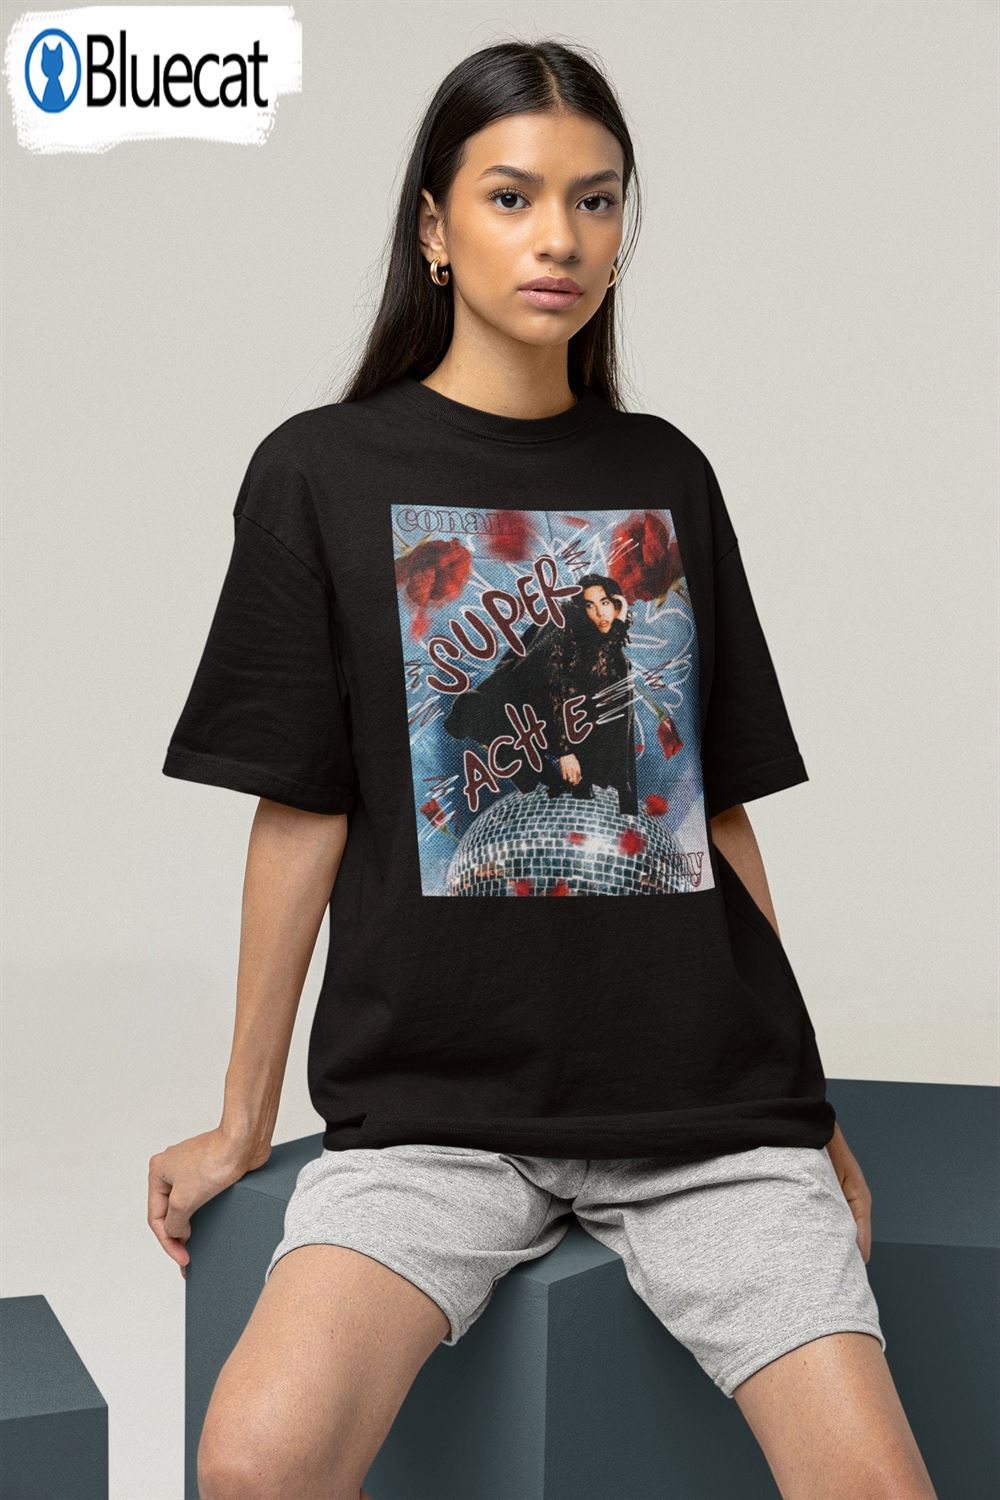 Eclipse Conan Superache Summer Child Shirt